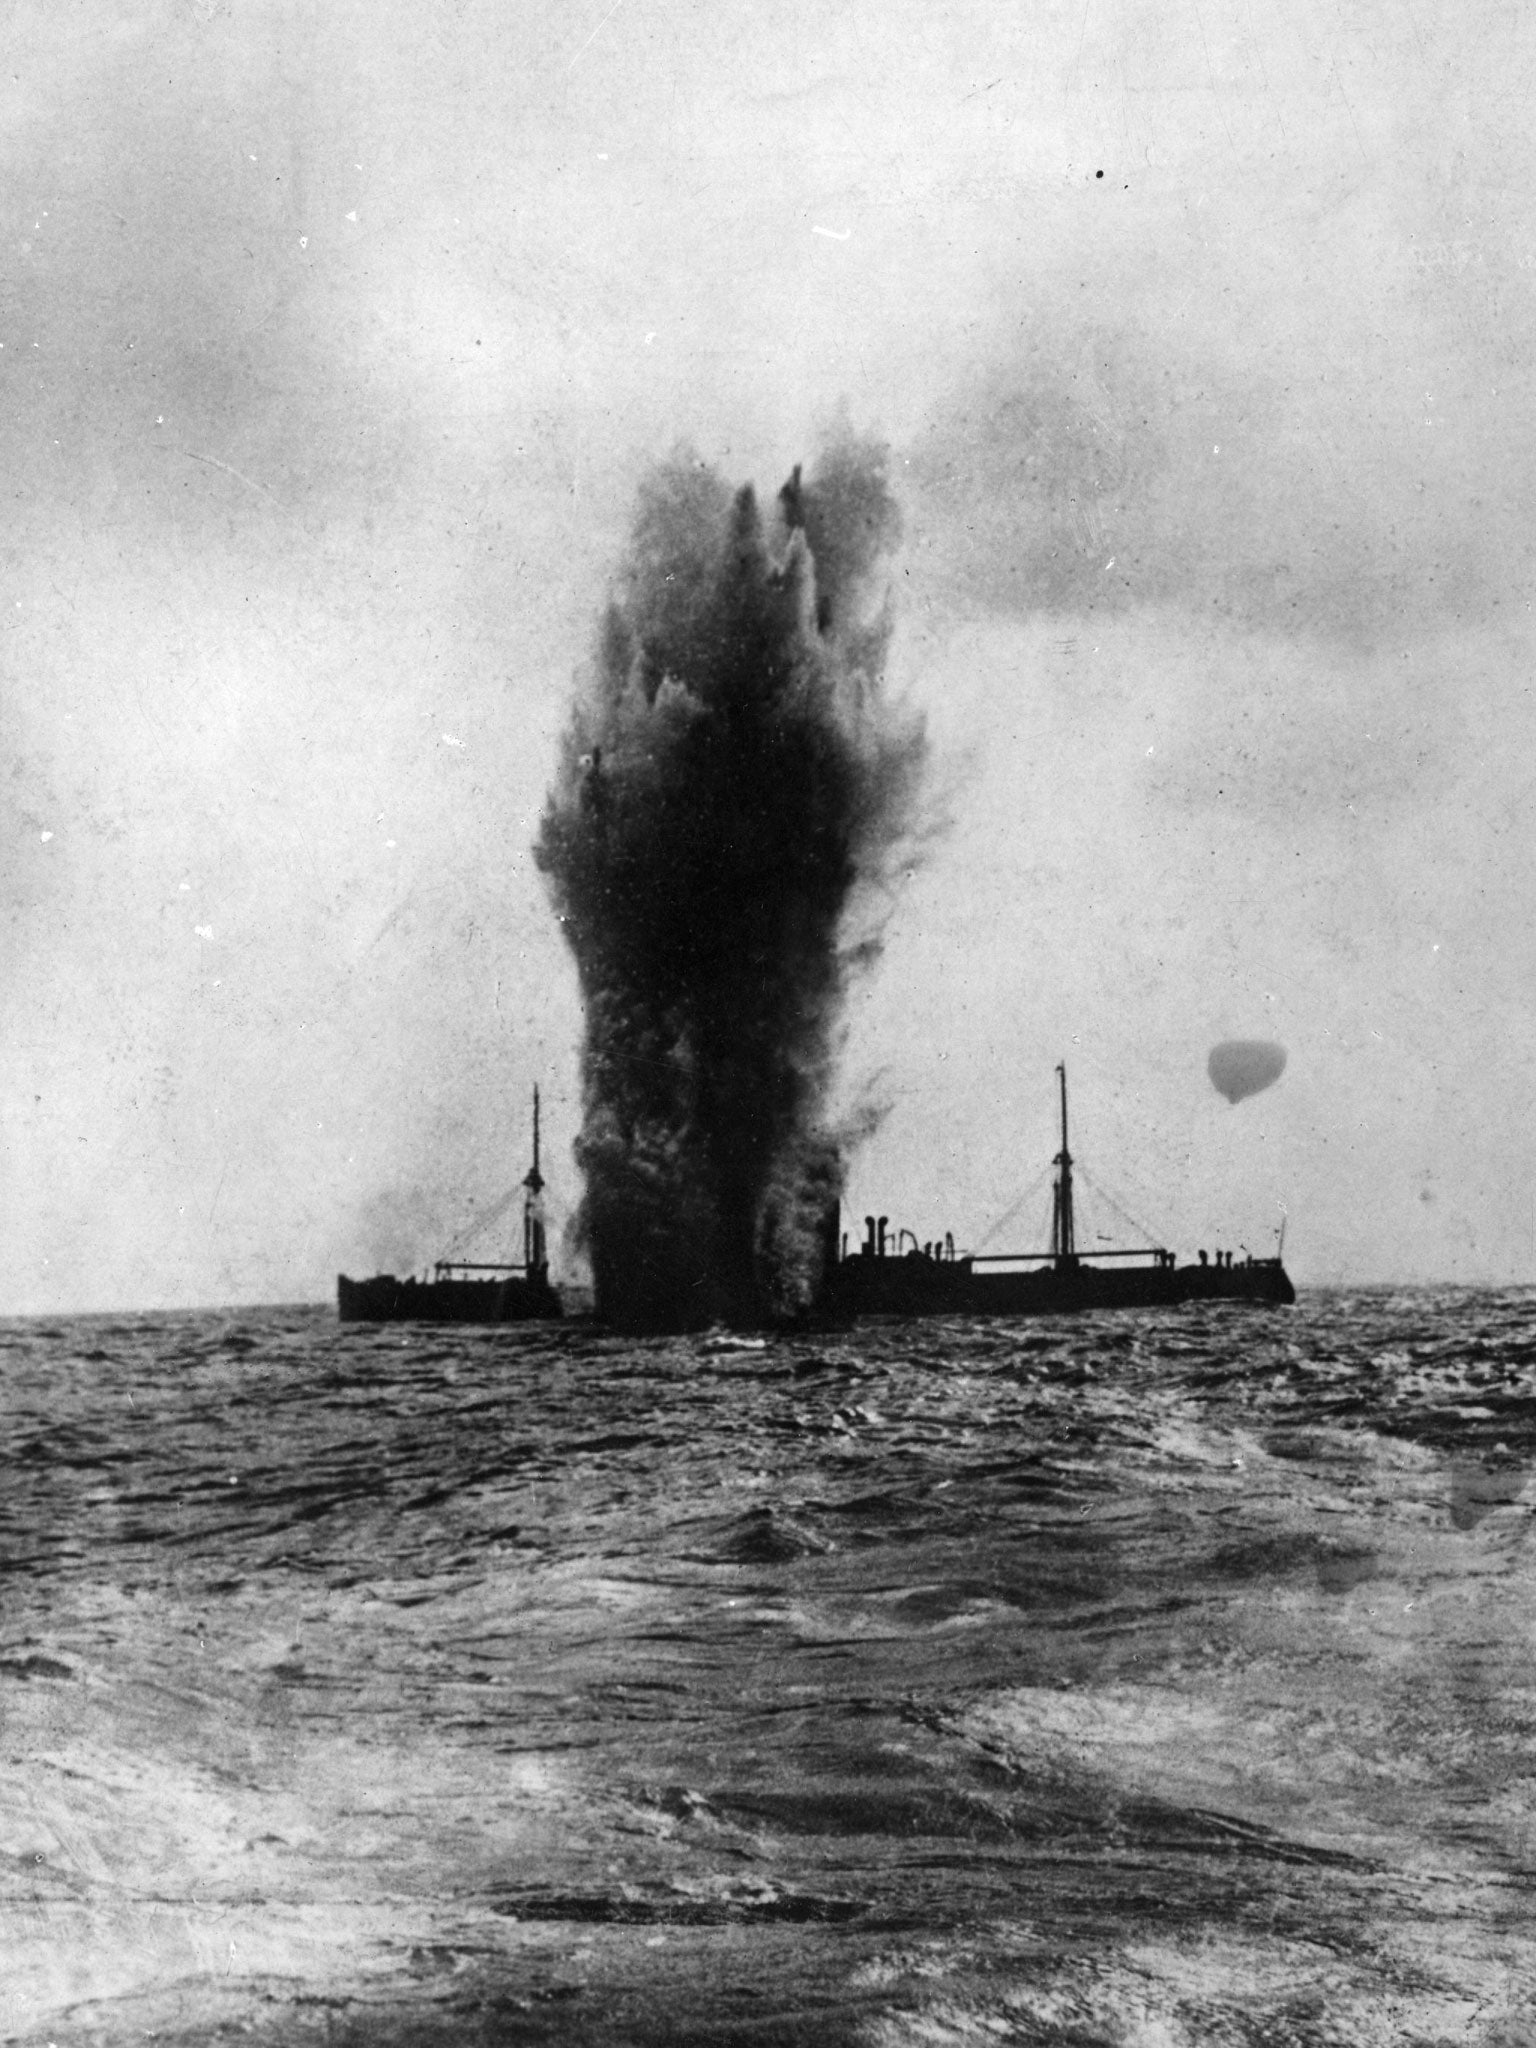 A steamer hit by a torpedo during the First World War